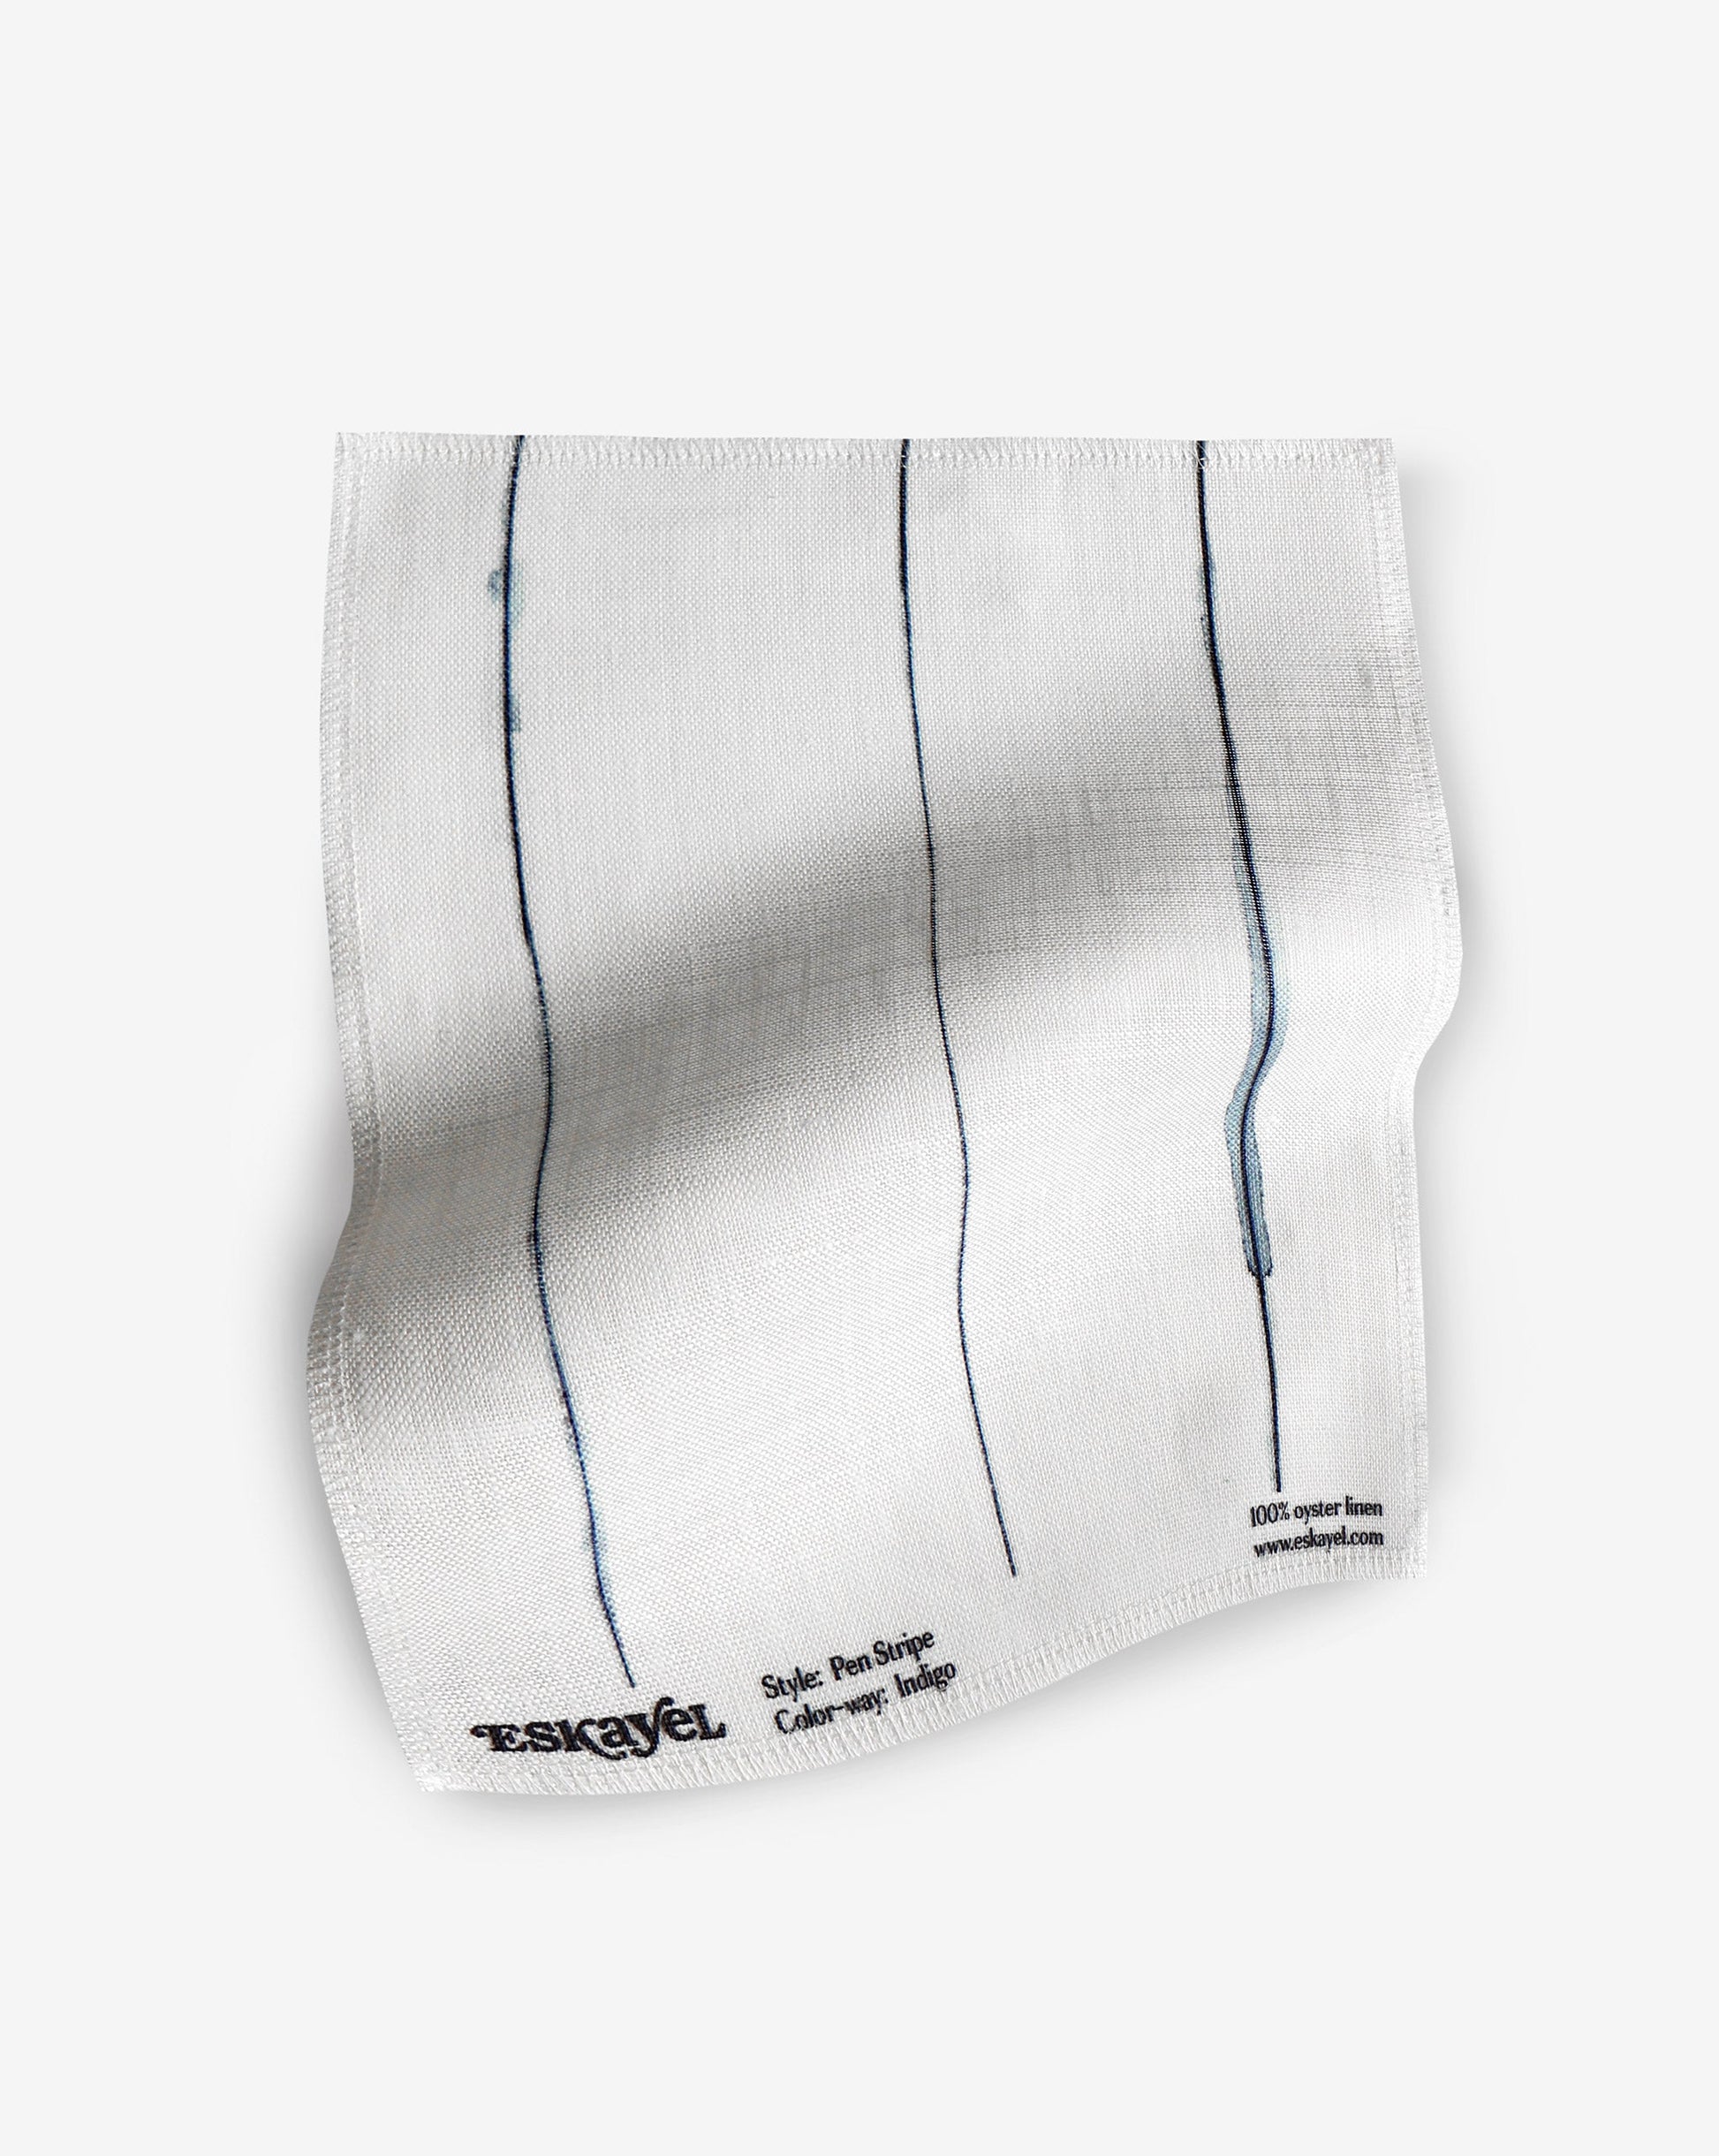 Pen Stripe Fabric Sample||Indigo